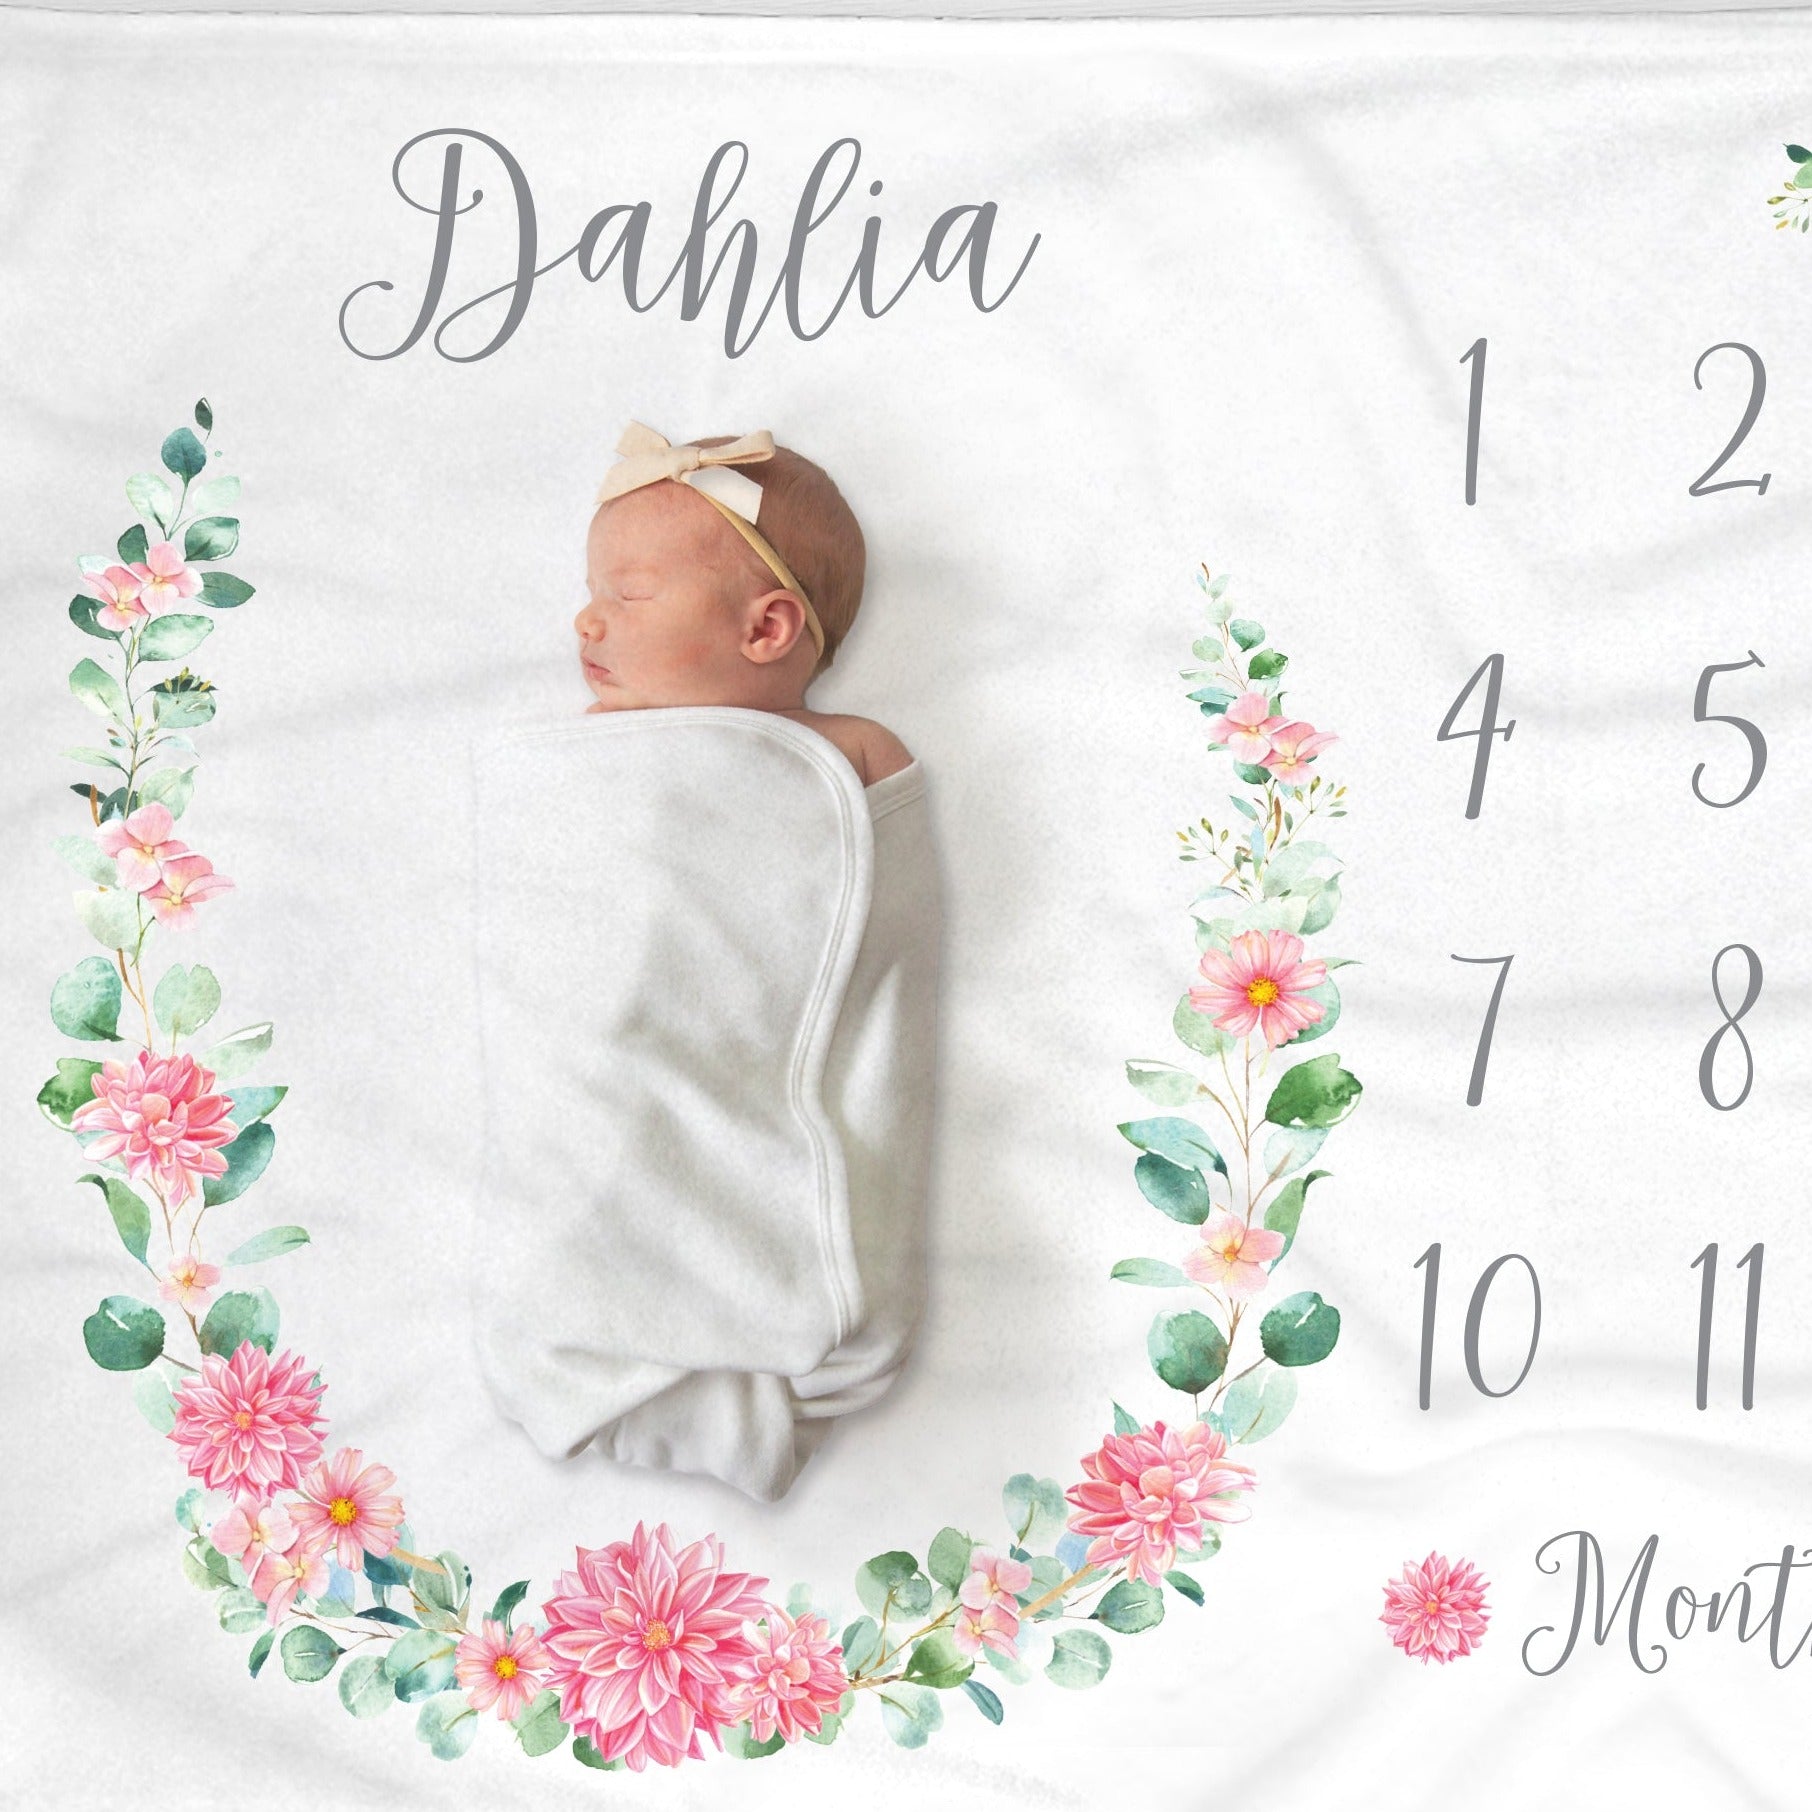 Dahlia flower milestone blanket, personalized on super soft fleece